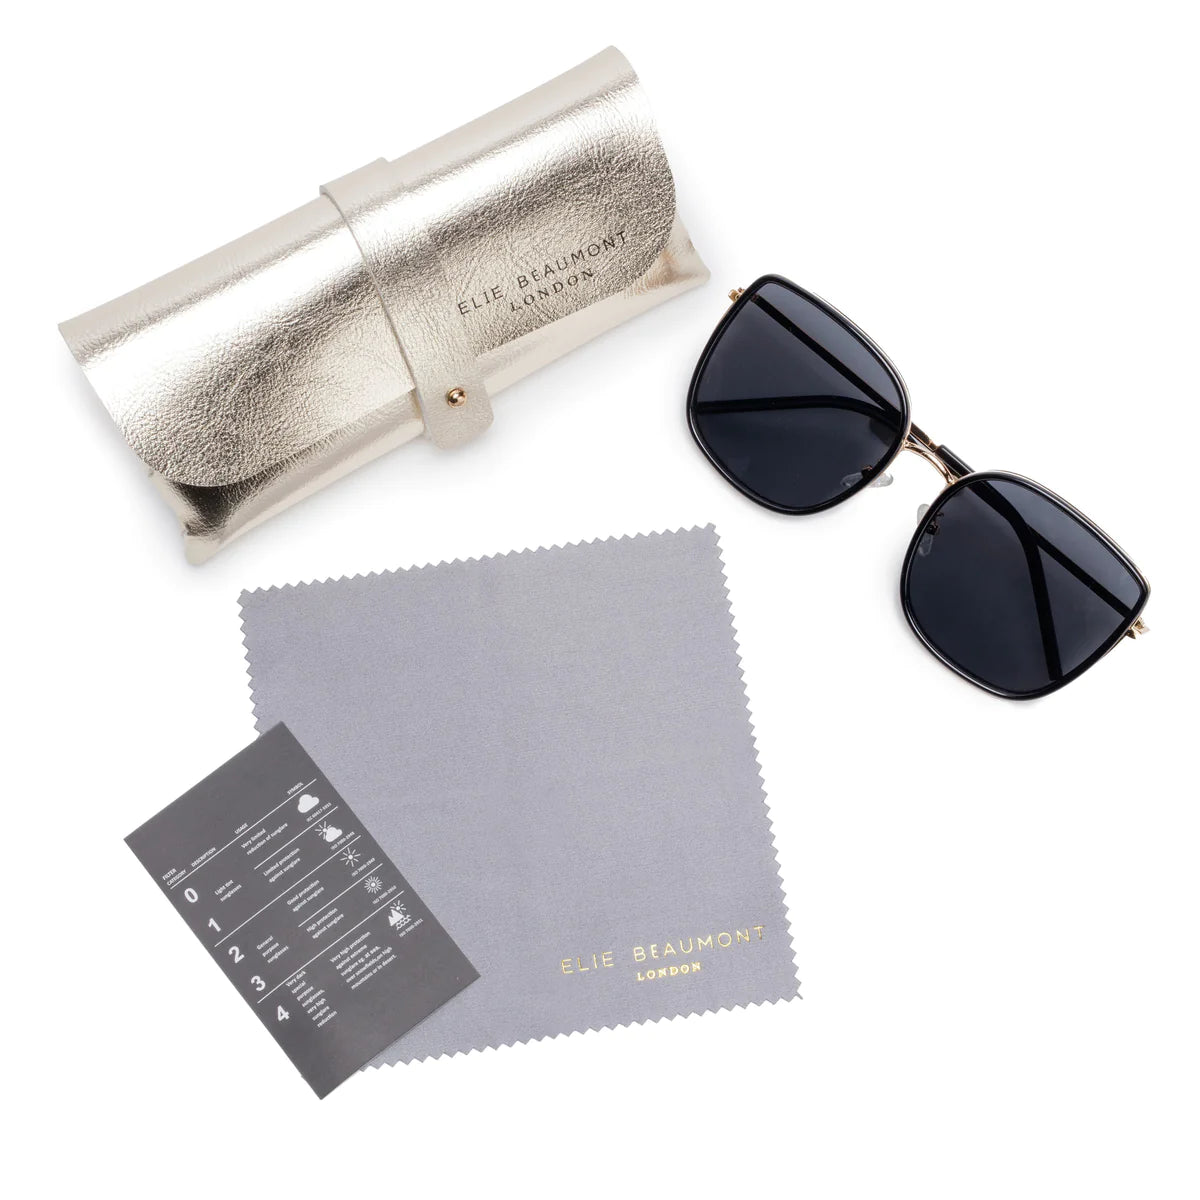 Portofino Gold and Black Lensed Sunglasses